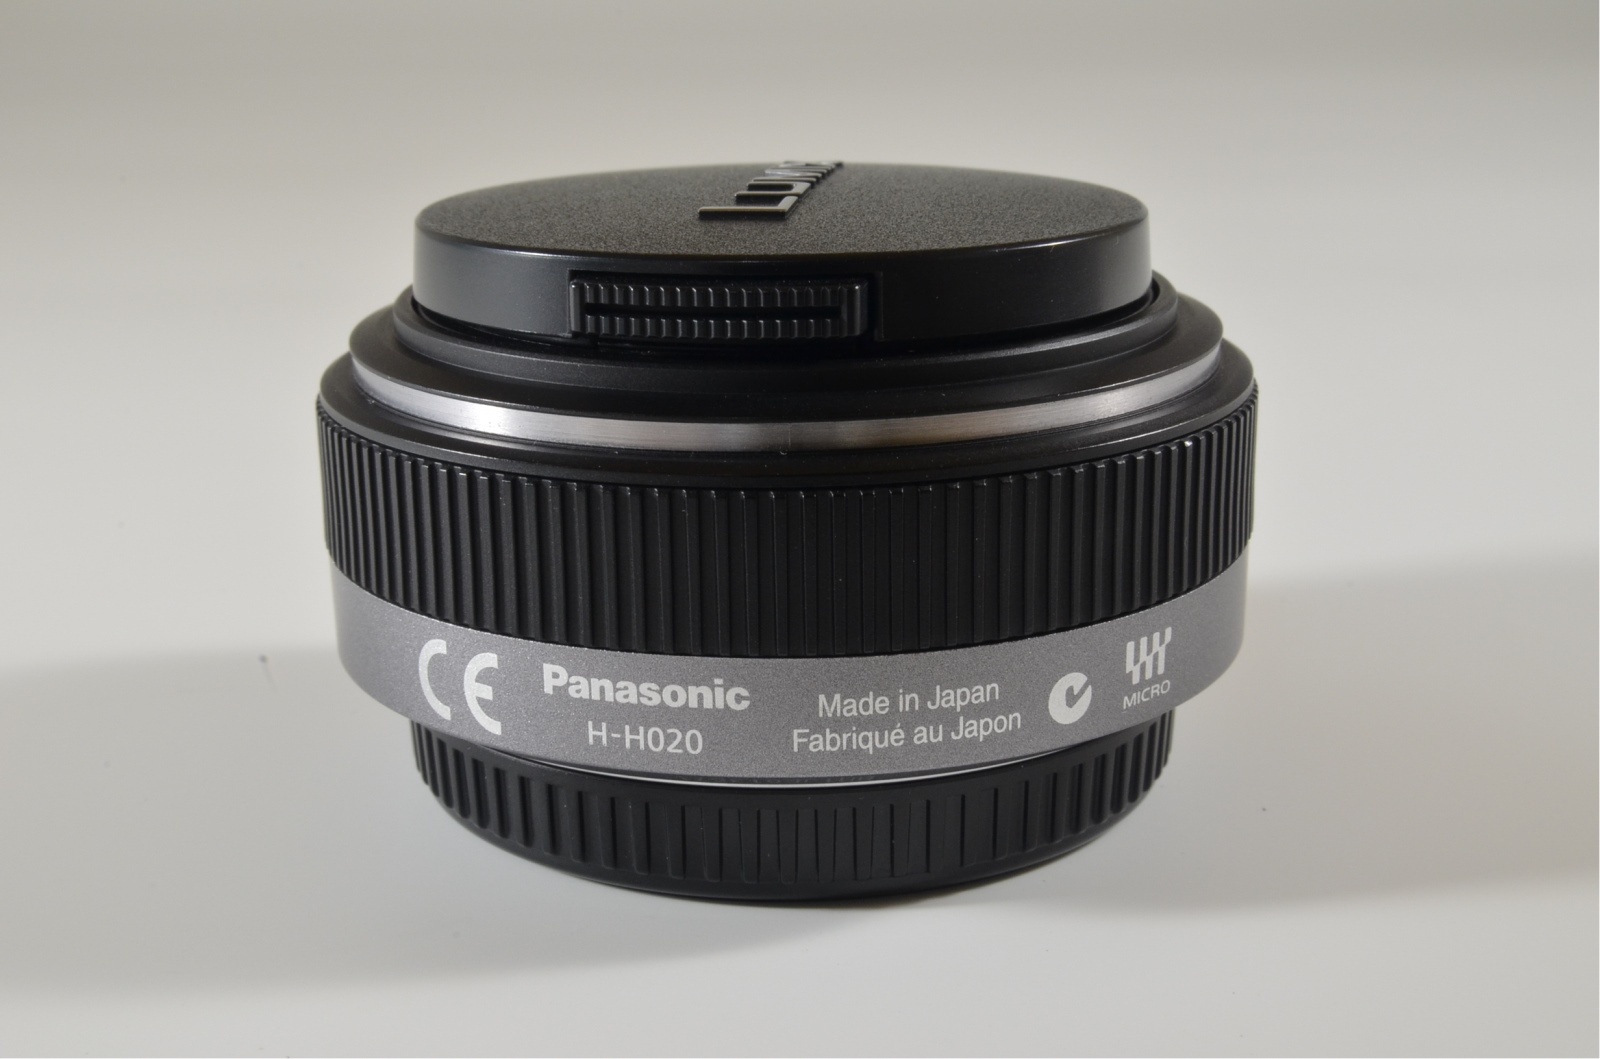 Panasonic LUMIX G 20mm f/1.7 ASPH H-H020 Lens #a0013 – SuperB JAPAN CAMERA